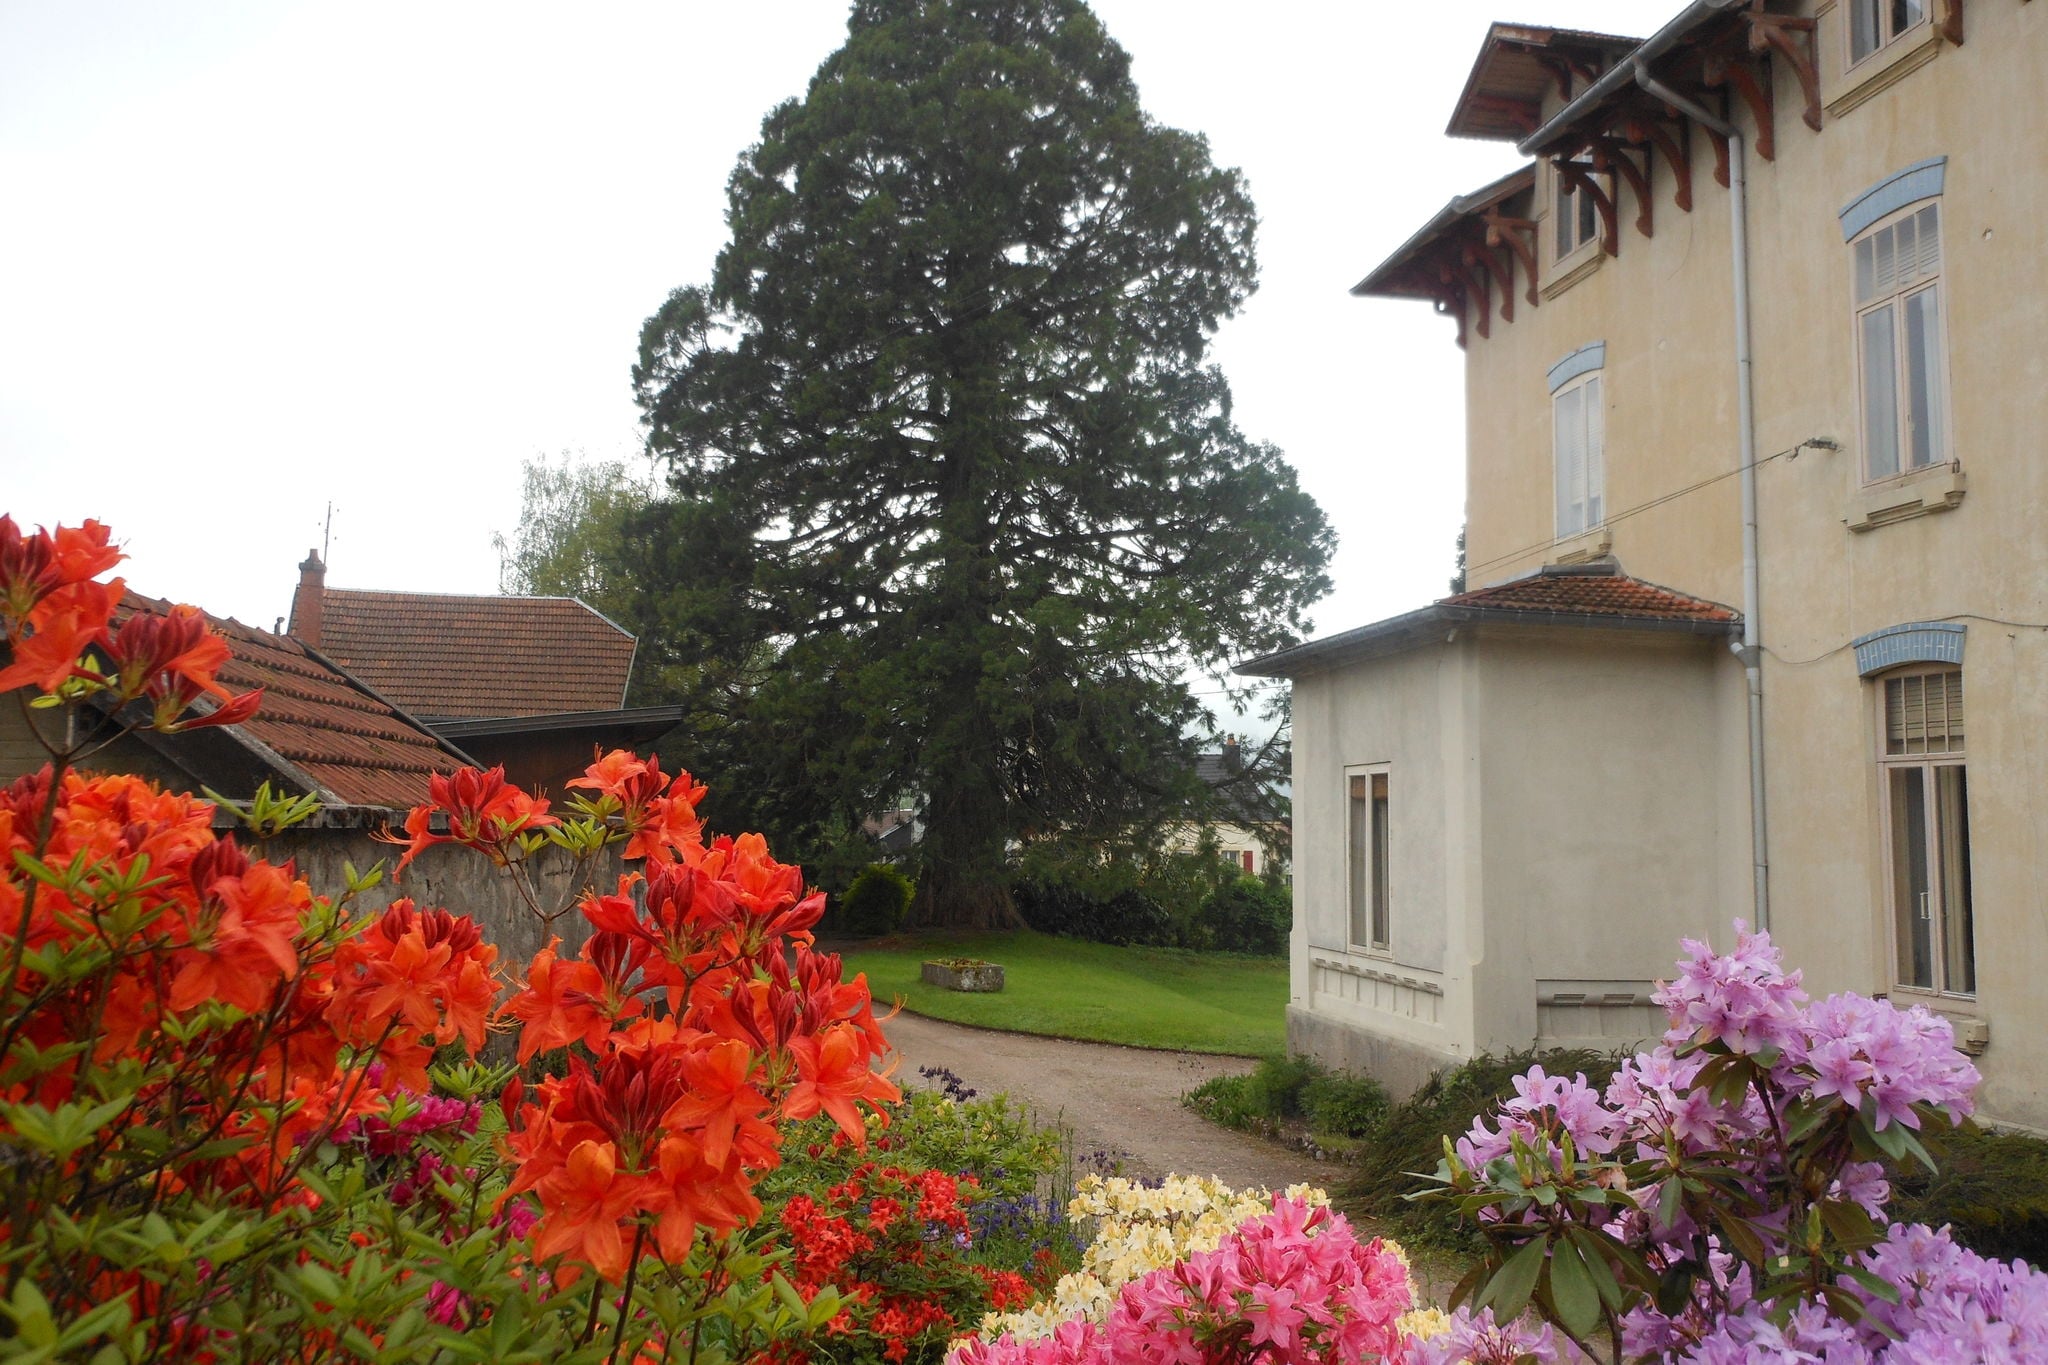 Delightful Mansion in Vecoux with Garden